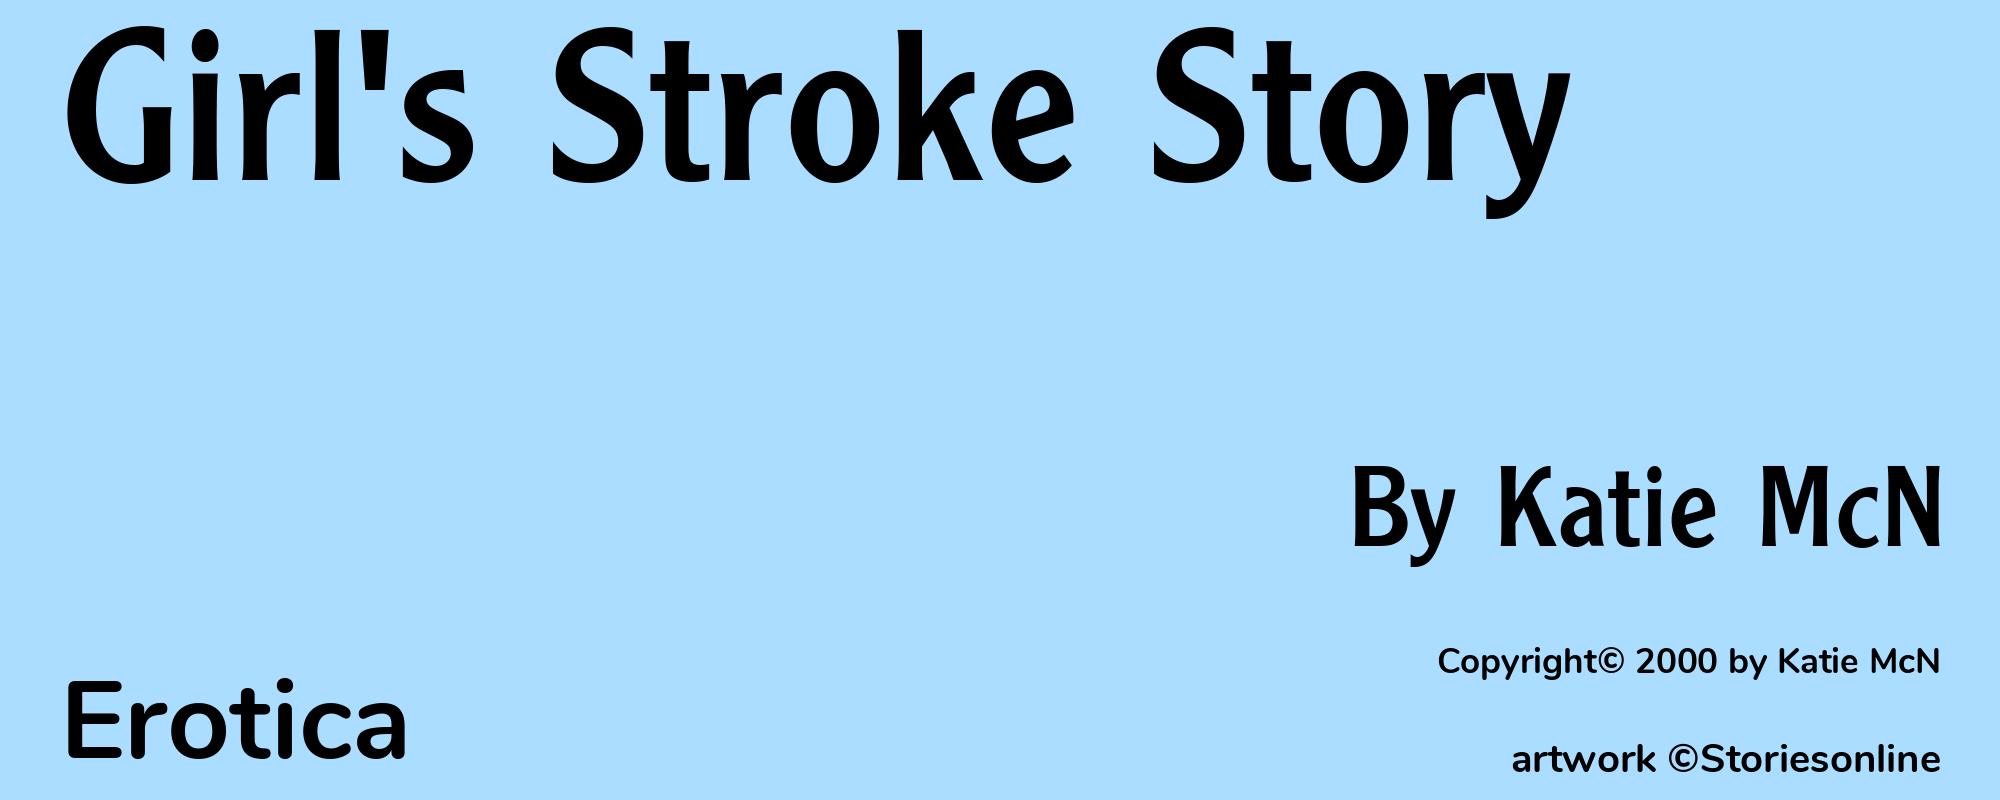 Girl's Stroke Story - Cover